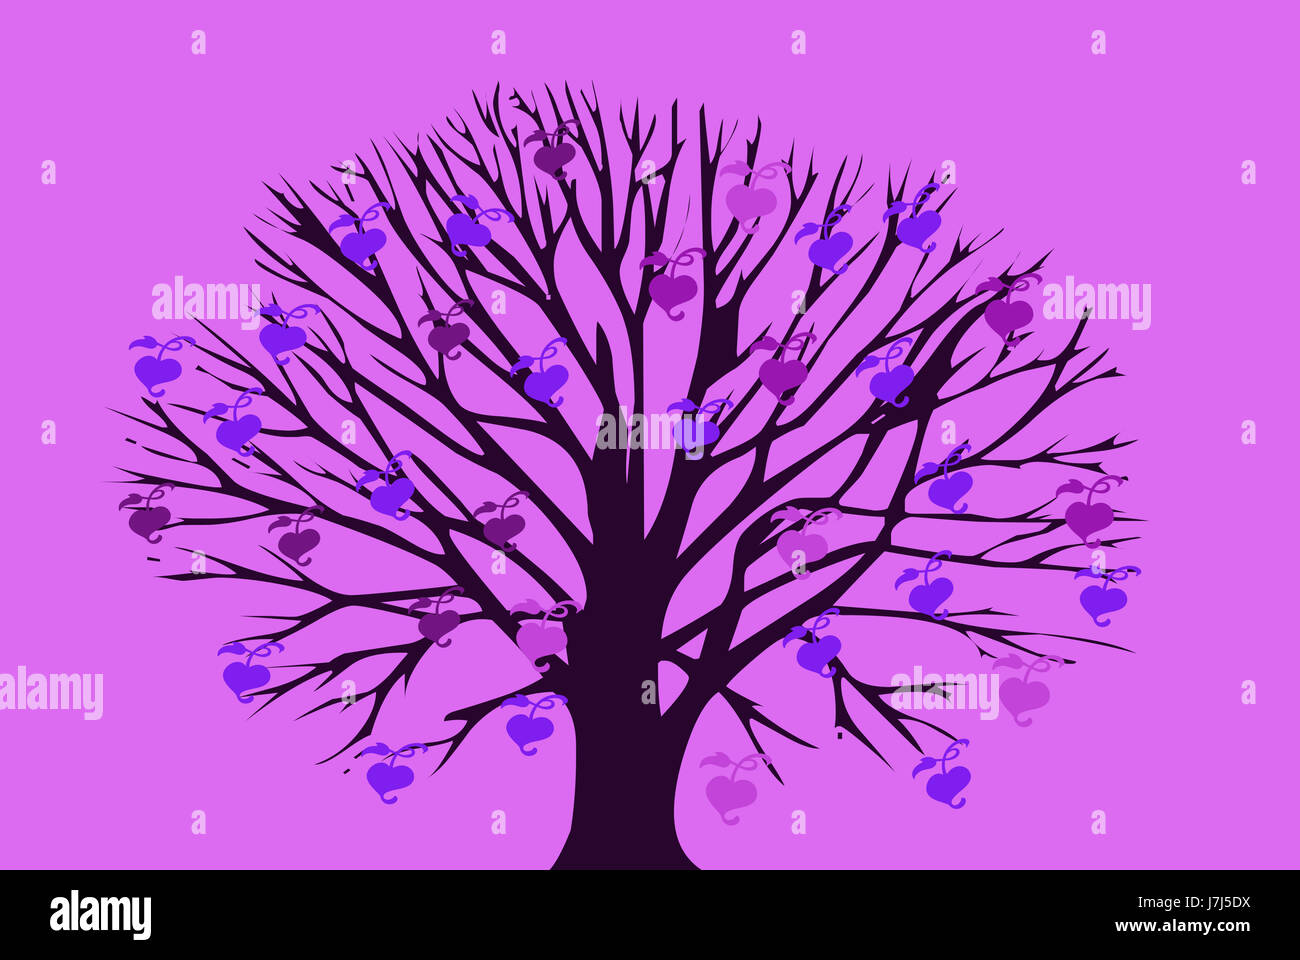 Árbol silueta púrpura corazones corazón telón de fondo gráfico de árbol flor Foto de stock